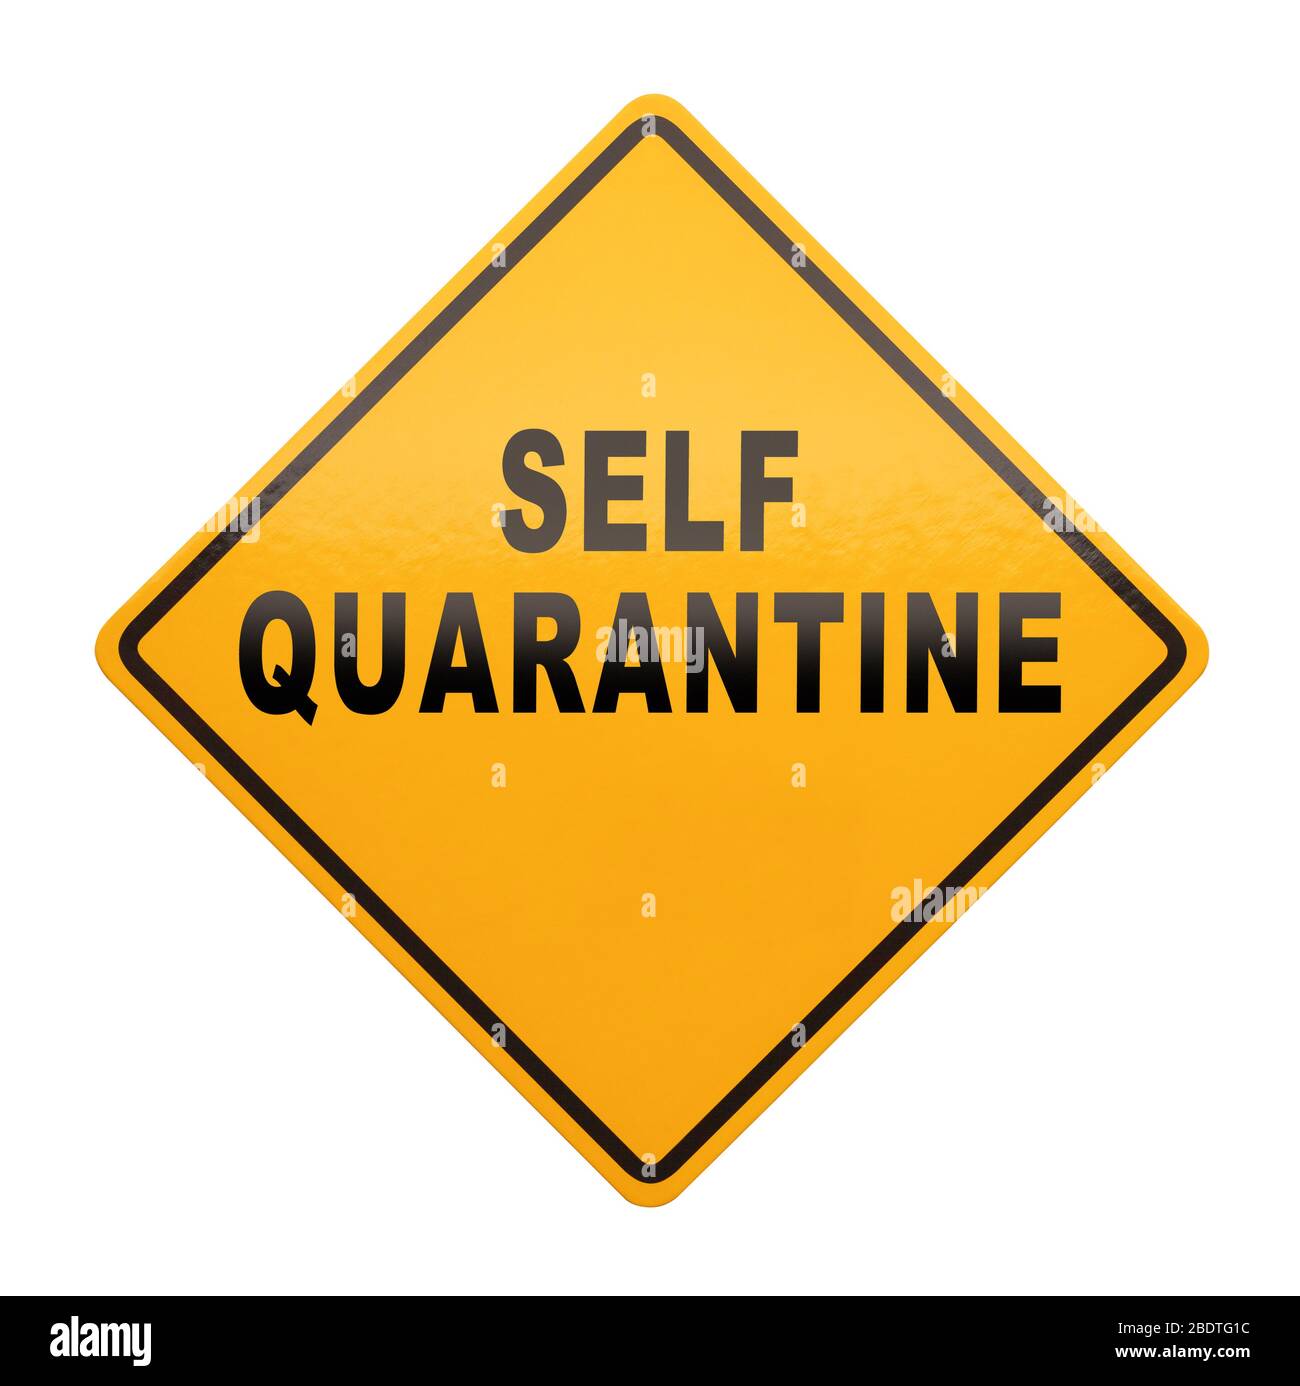 Yellow Self Quarantine Sign Isolated on White Background. Stock Photo